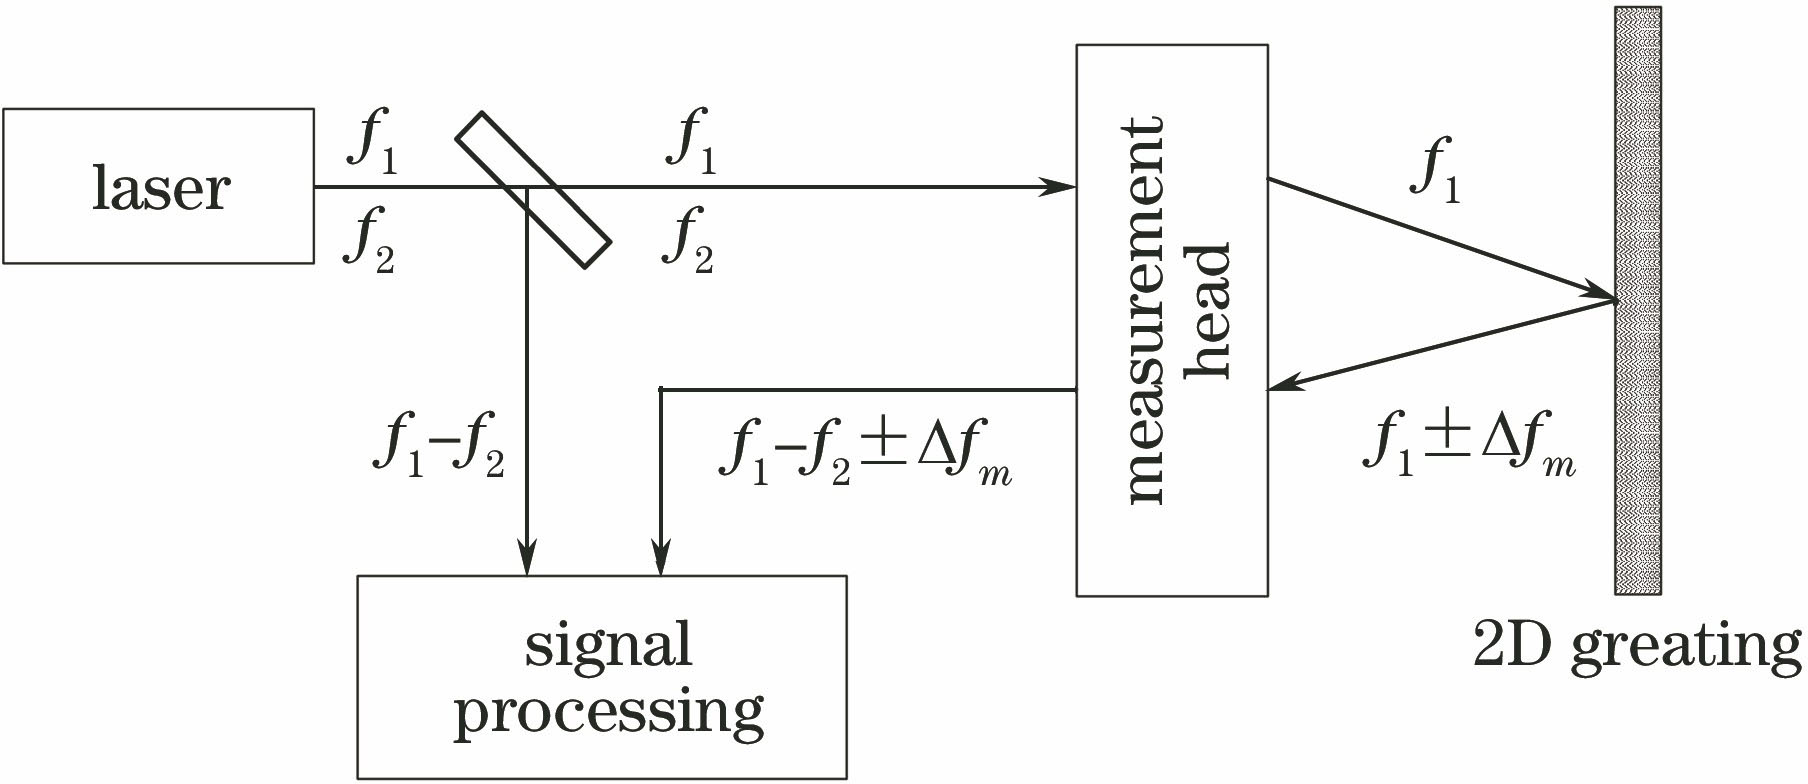 Measuring principle of 2D grating system